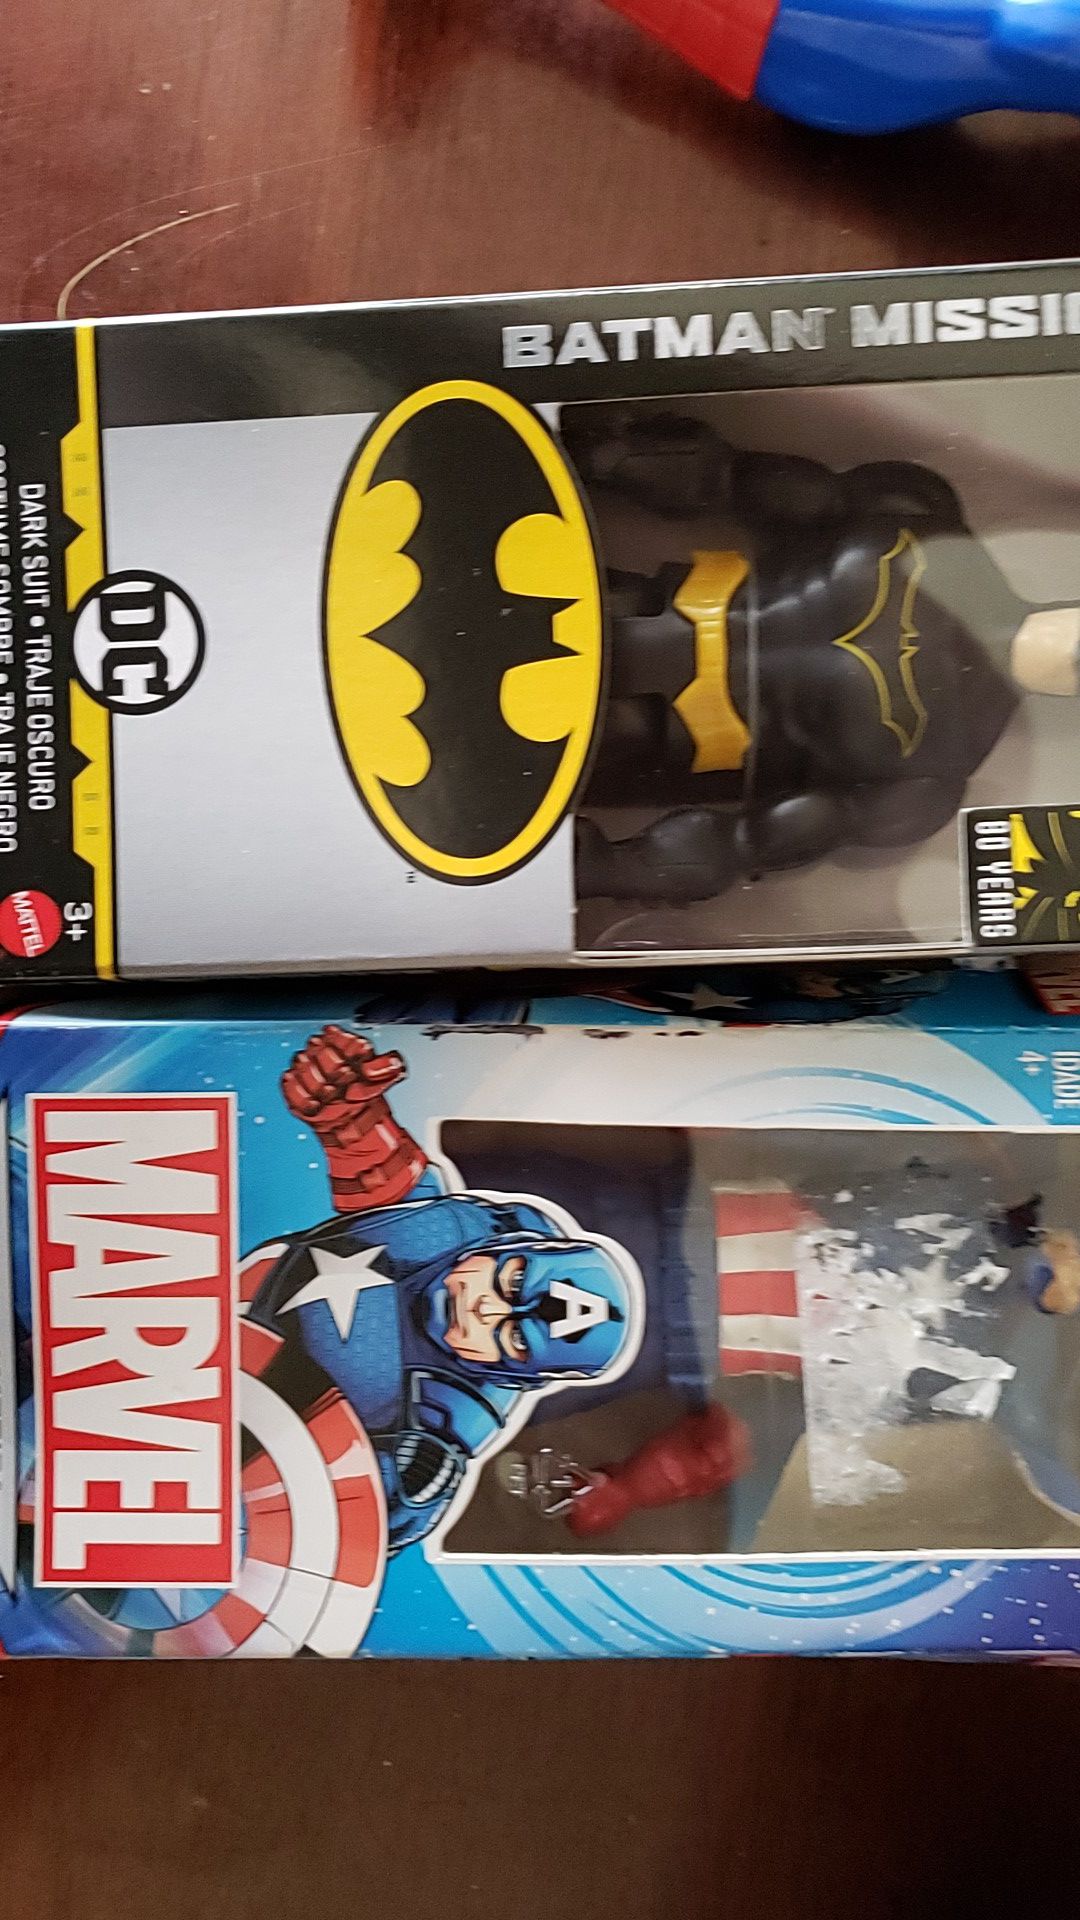 Captain America and batman mini figures